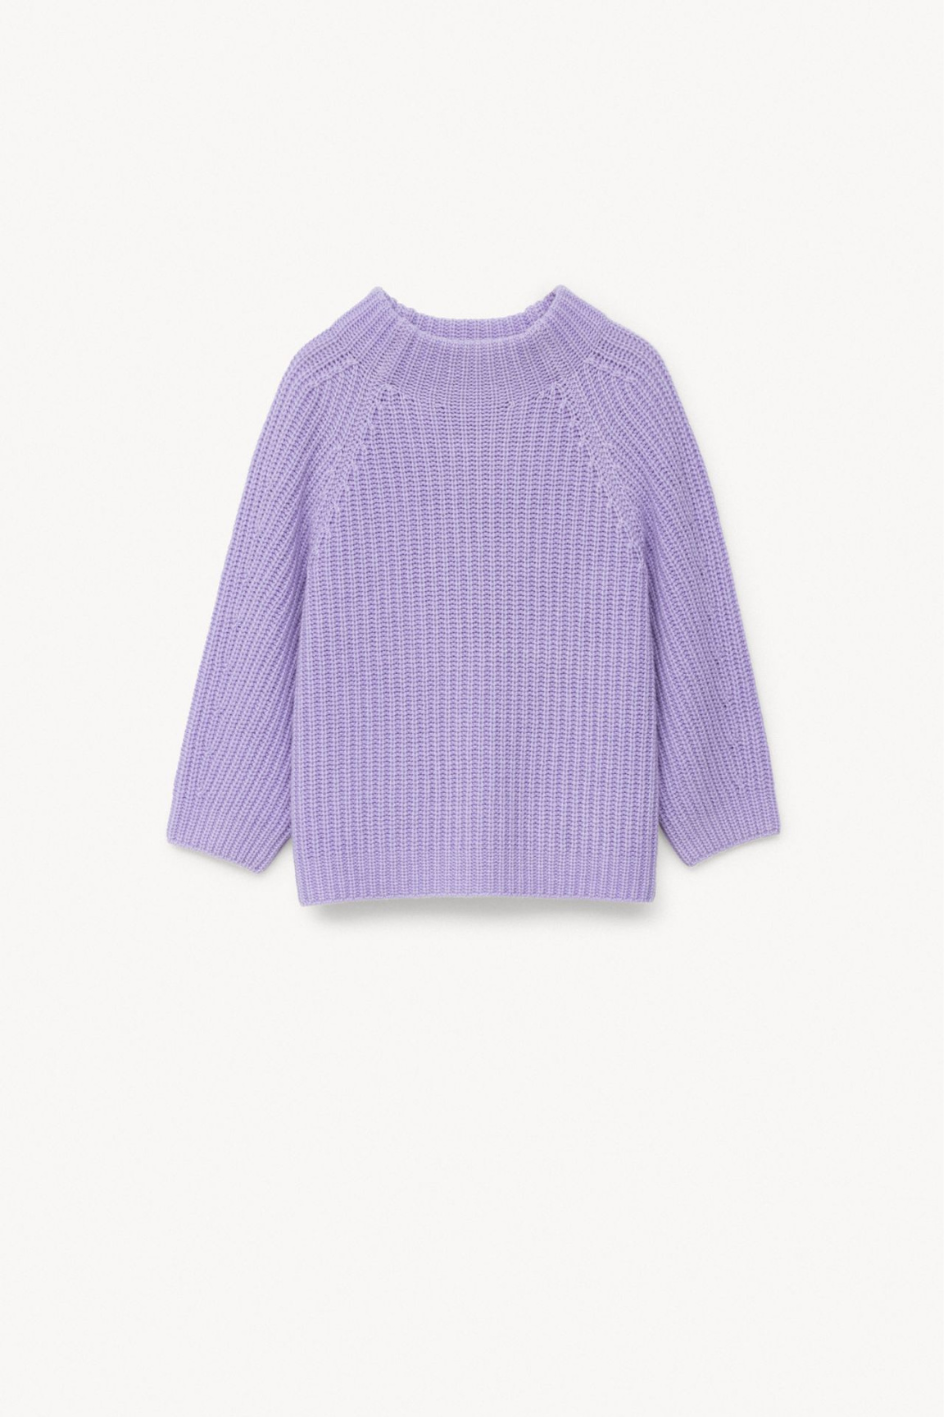 Fallou Stonewashed Cashmere Sweater